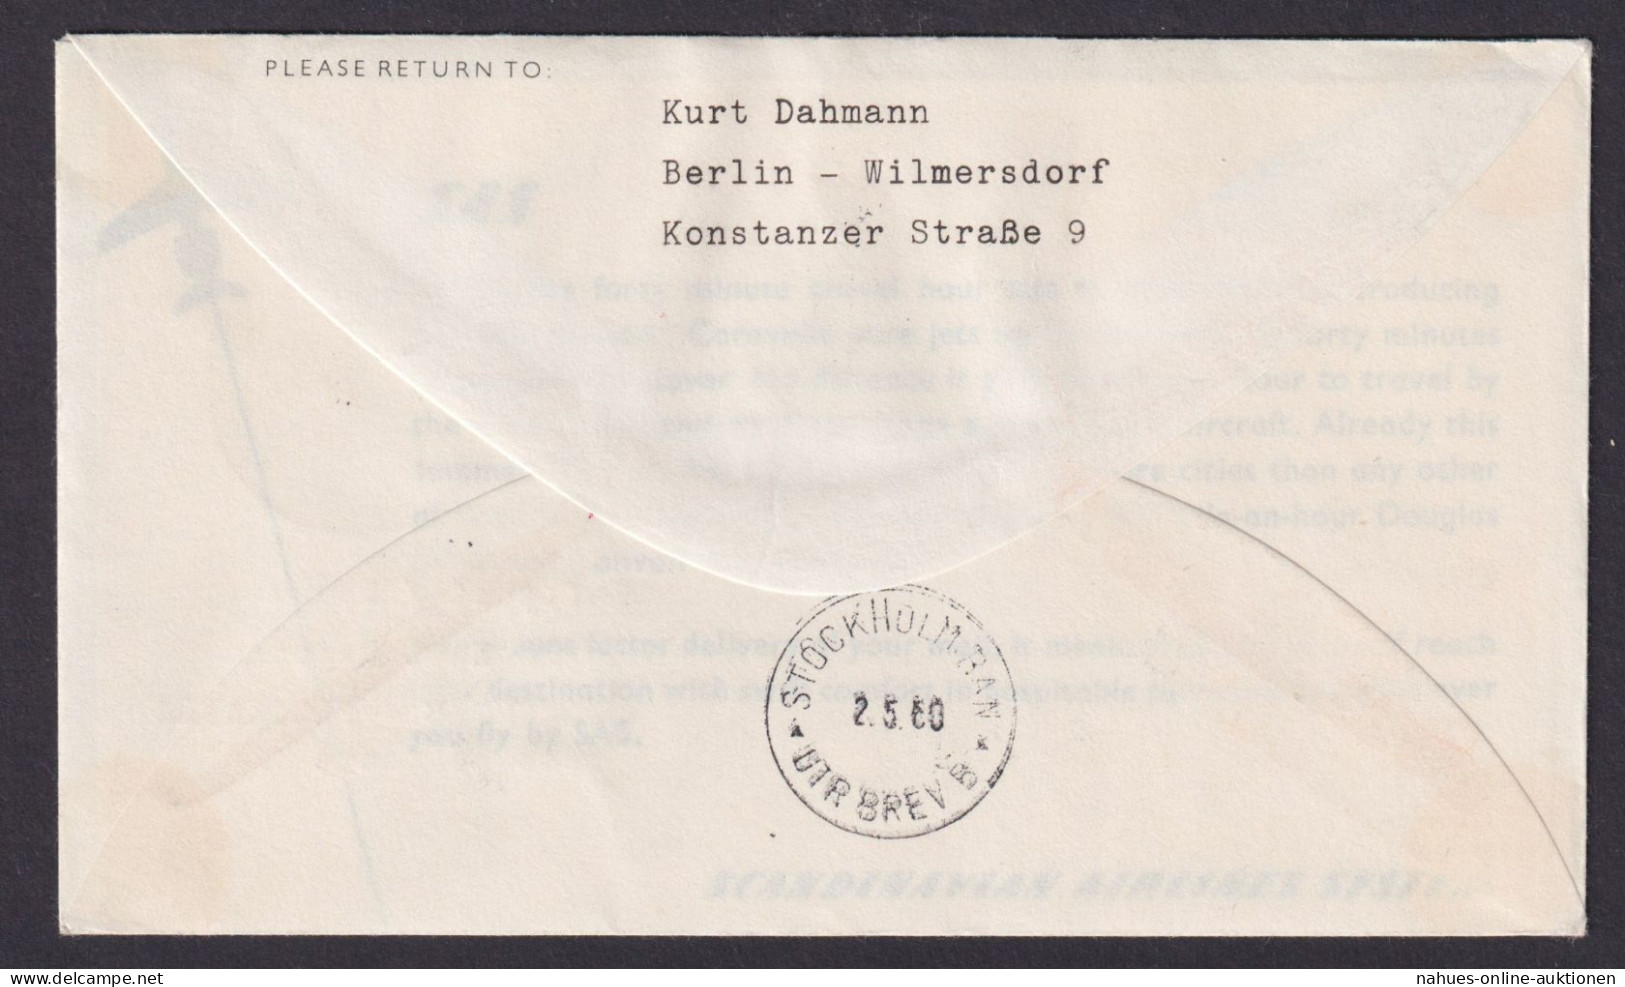 Flugpost Brief Air Mail Erstflug SAS Caravelle Frankfurt Kopenhagen Stockholm - Lettres & Documents